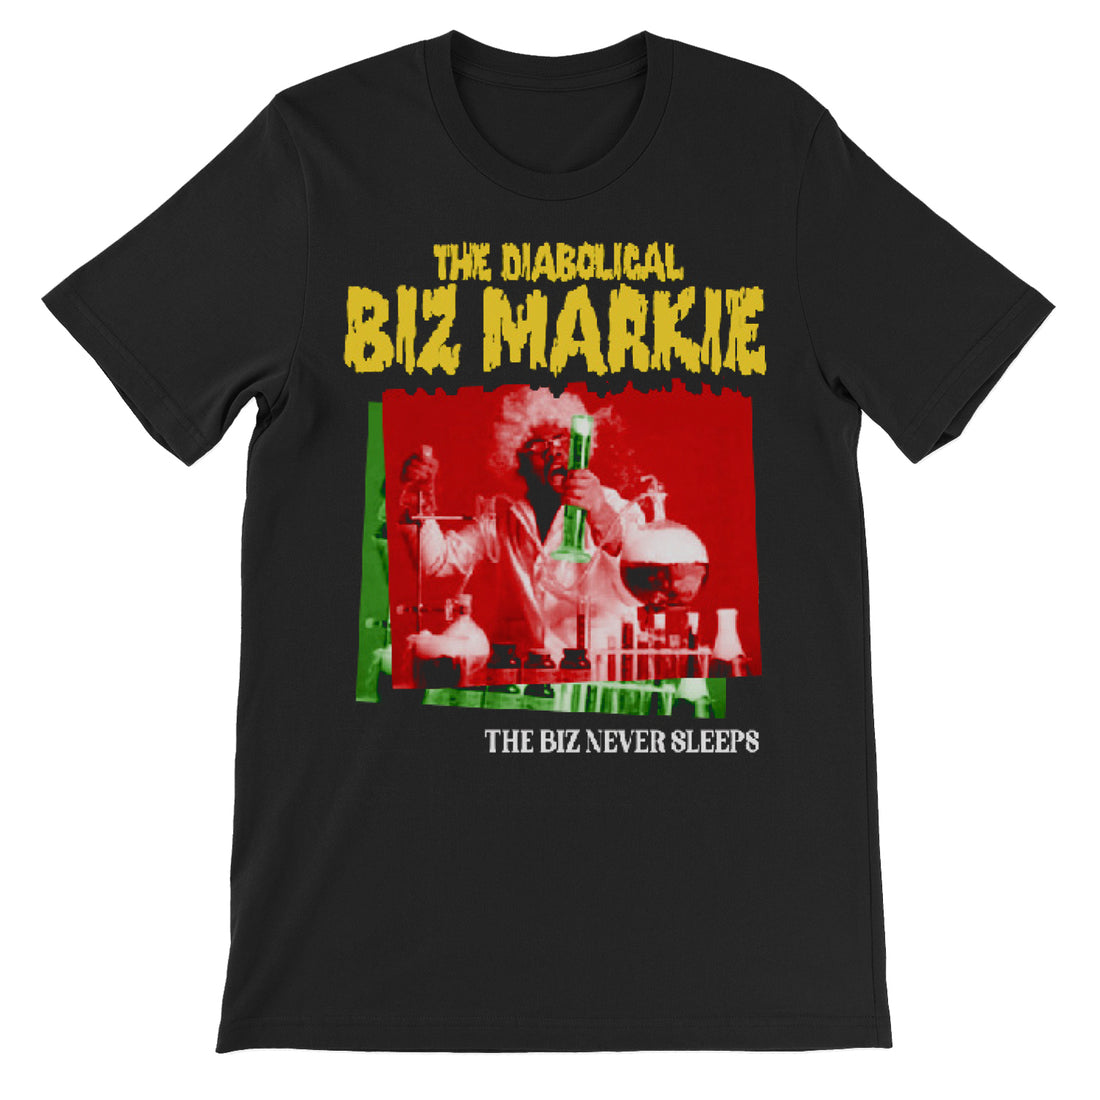 Biz Markie "The Biz Never Sleeps" T-Shirt